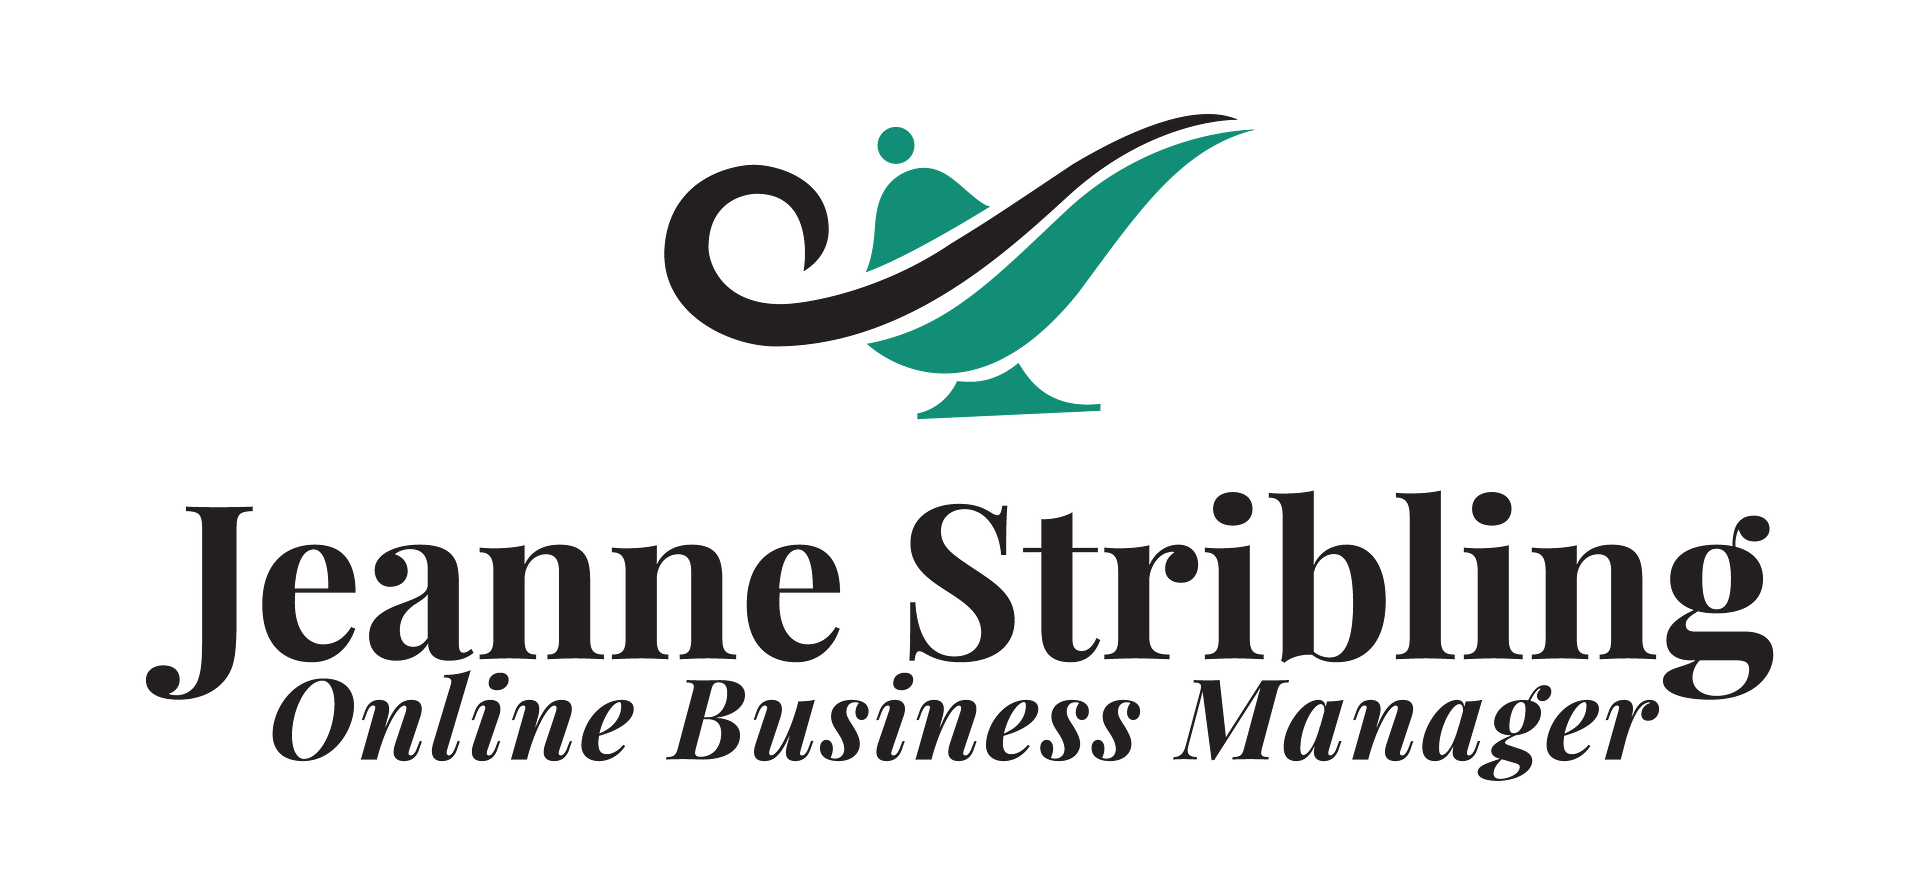 Jeanne Stribling Online Business Manager